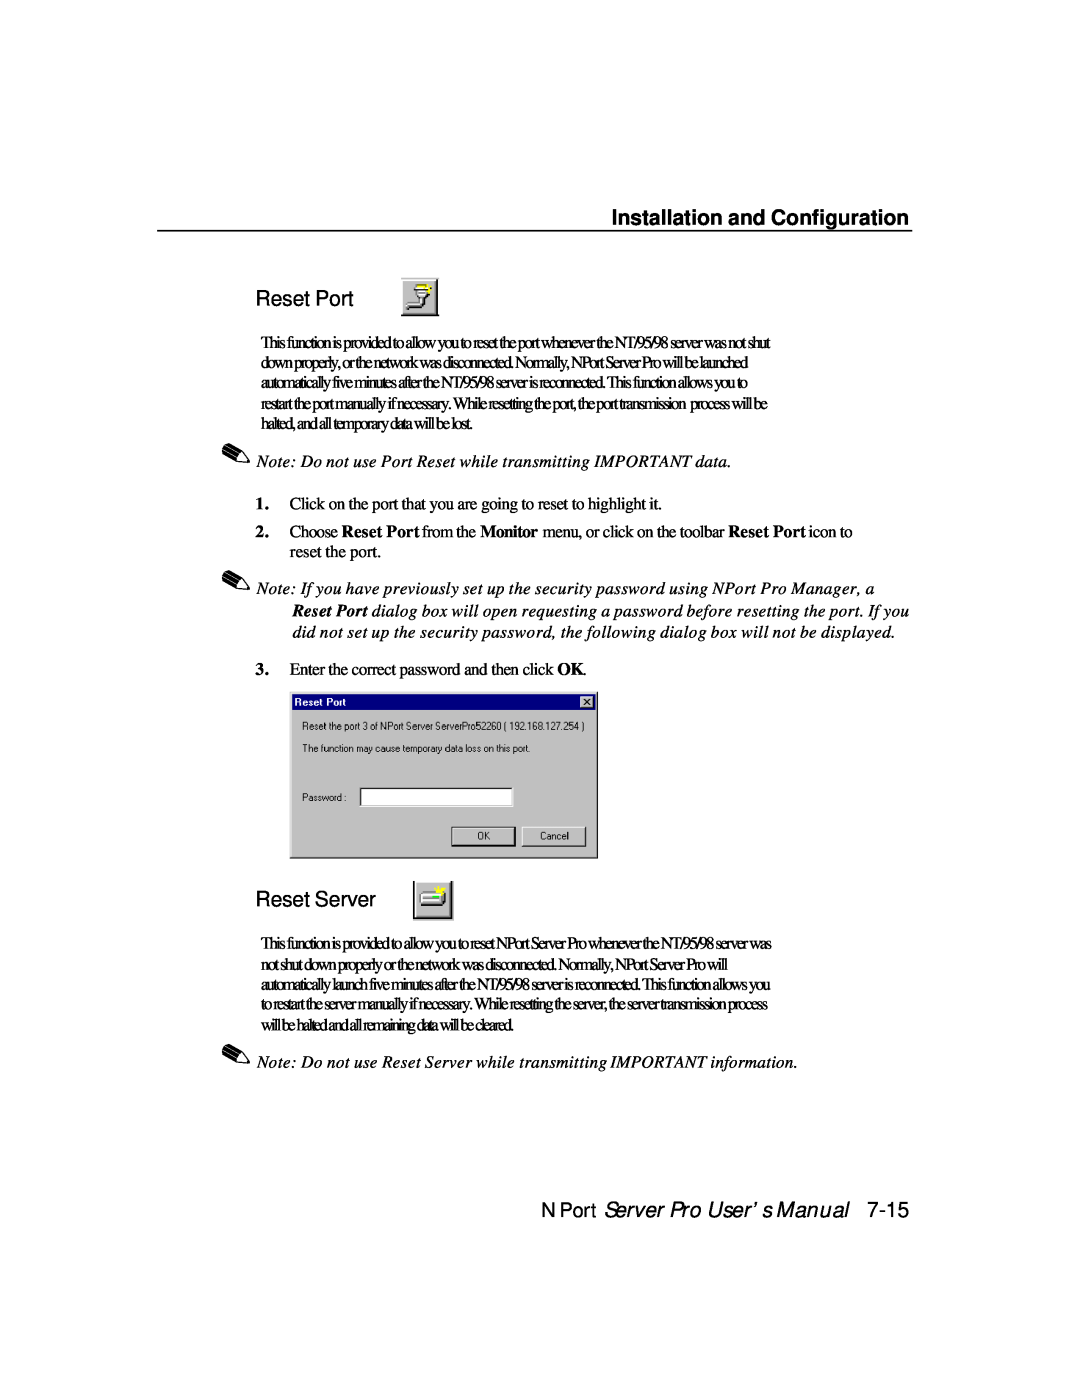 Moxa Technologies DE-308, DE-303 Reset Port, Reset Server, Installation and Configuration, NPort Server Pro User’s Manual 